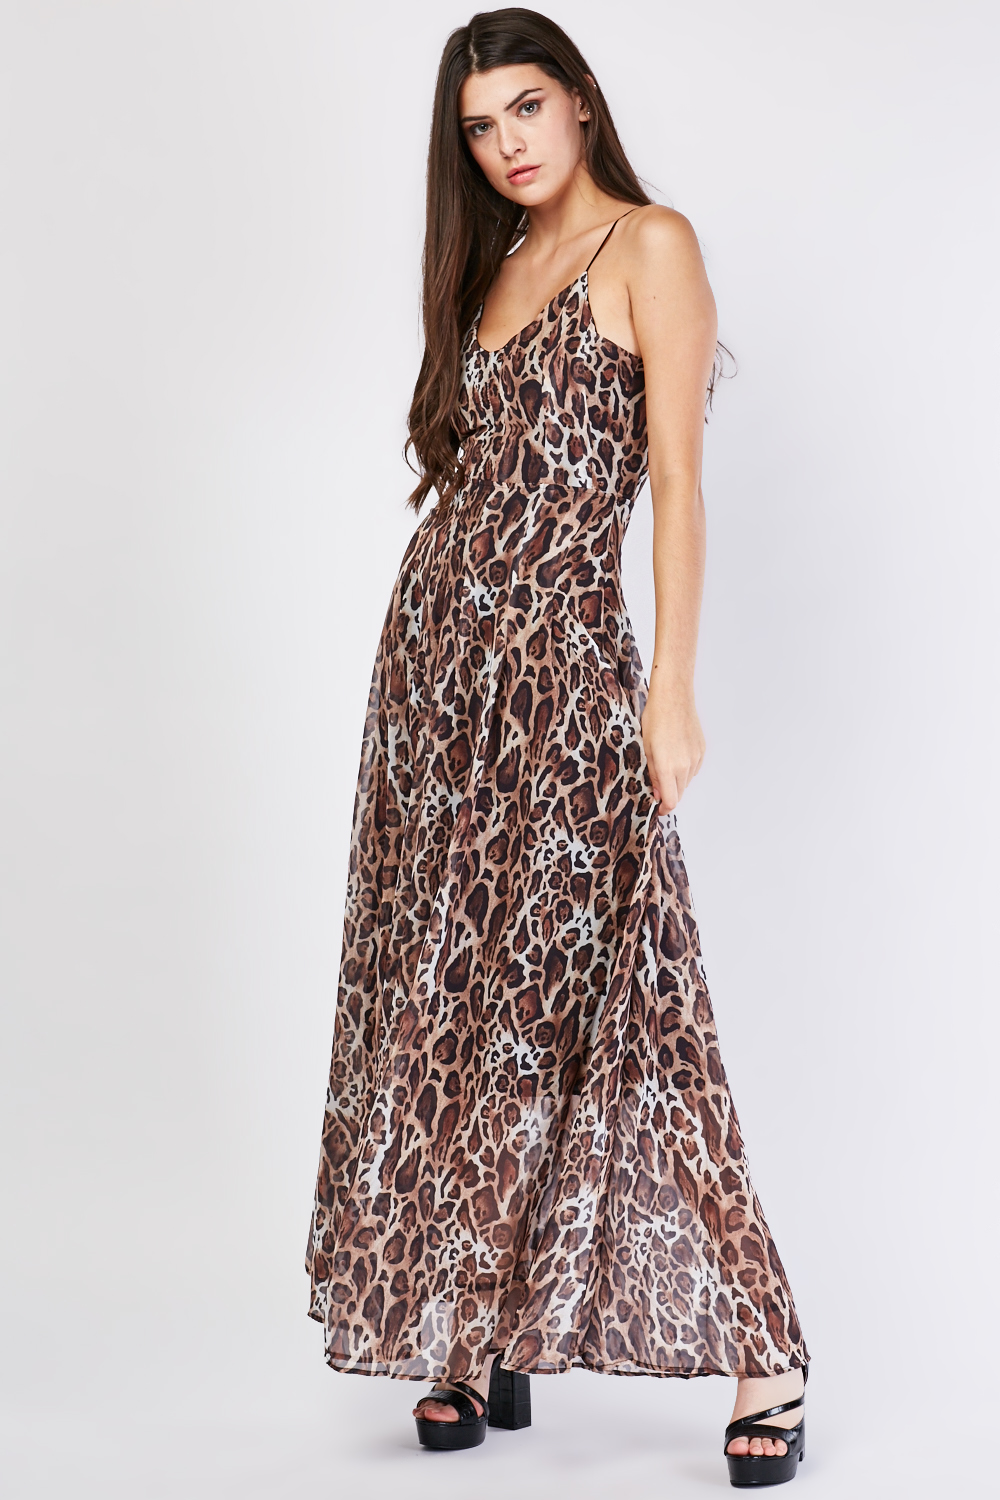 Leopard Print Sheer Maxi Dress - Just $6